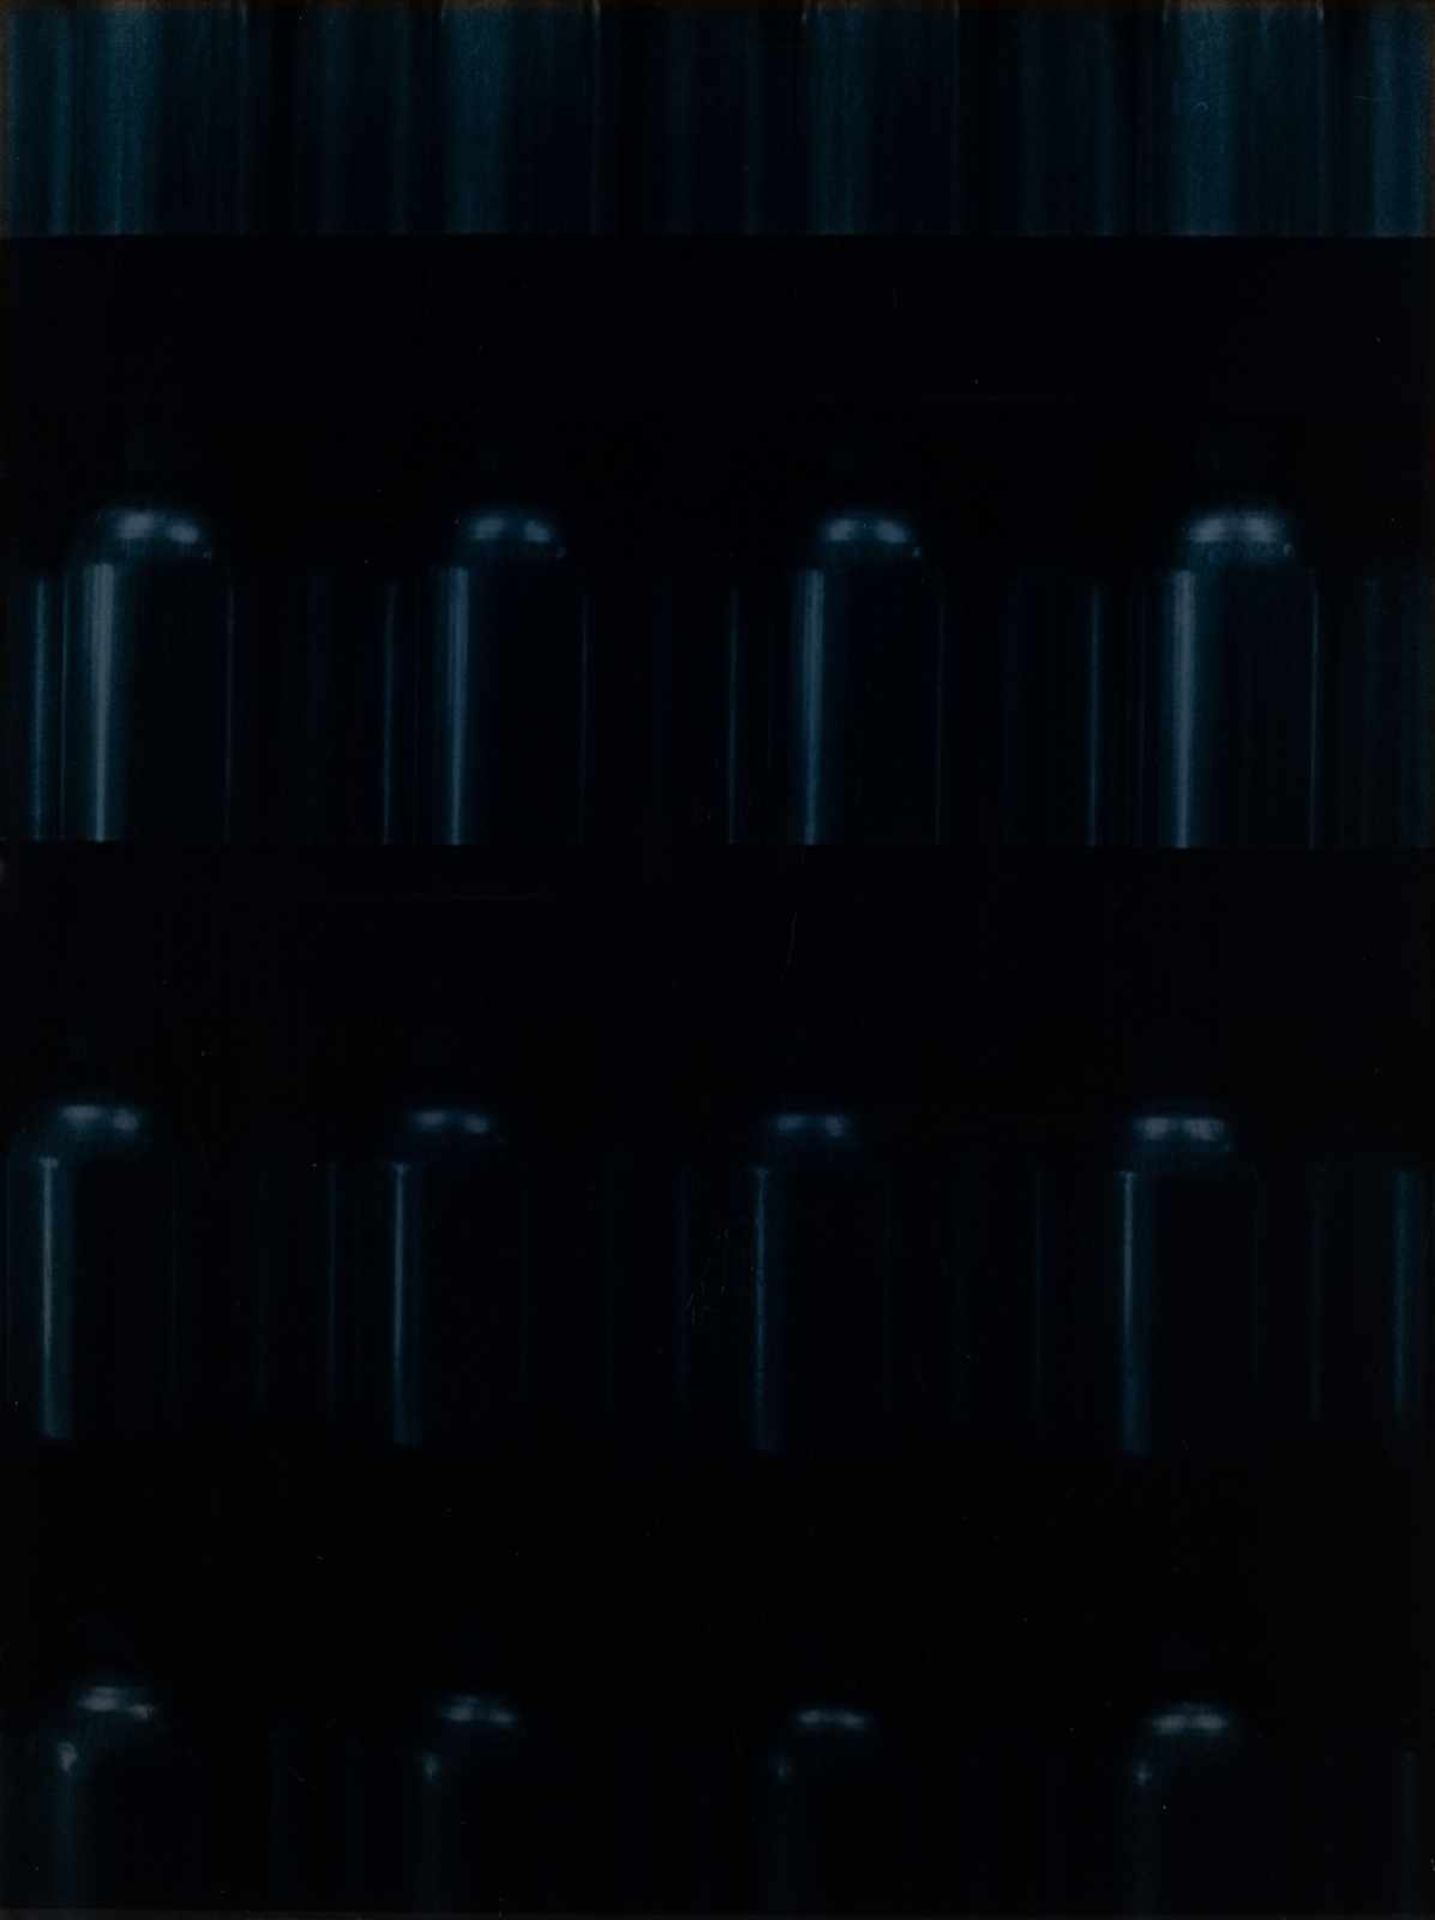 Ines Lombardi Sao Paulo 1958 geb. Ohne Titel C-Print unter Plexiglas (2-teilig) je 40 x 30 cm 1990-